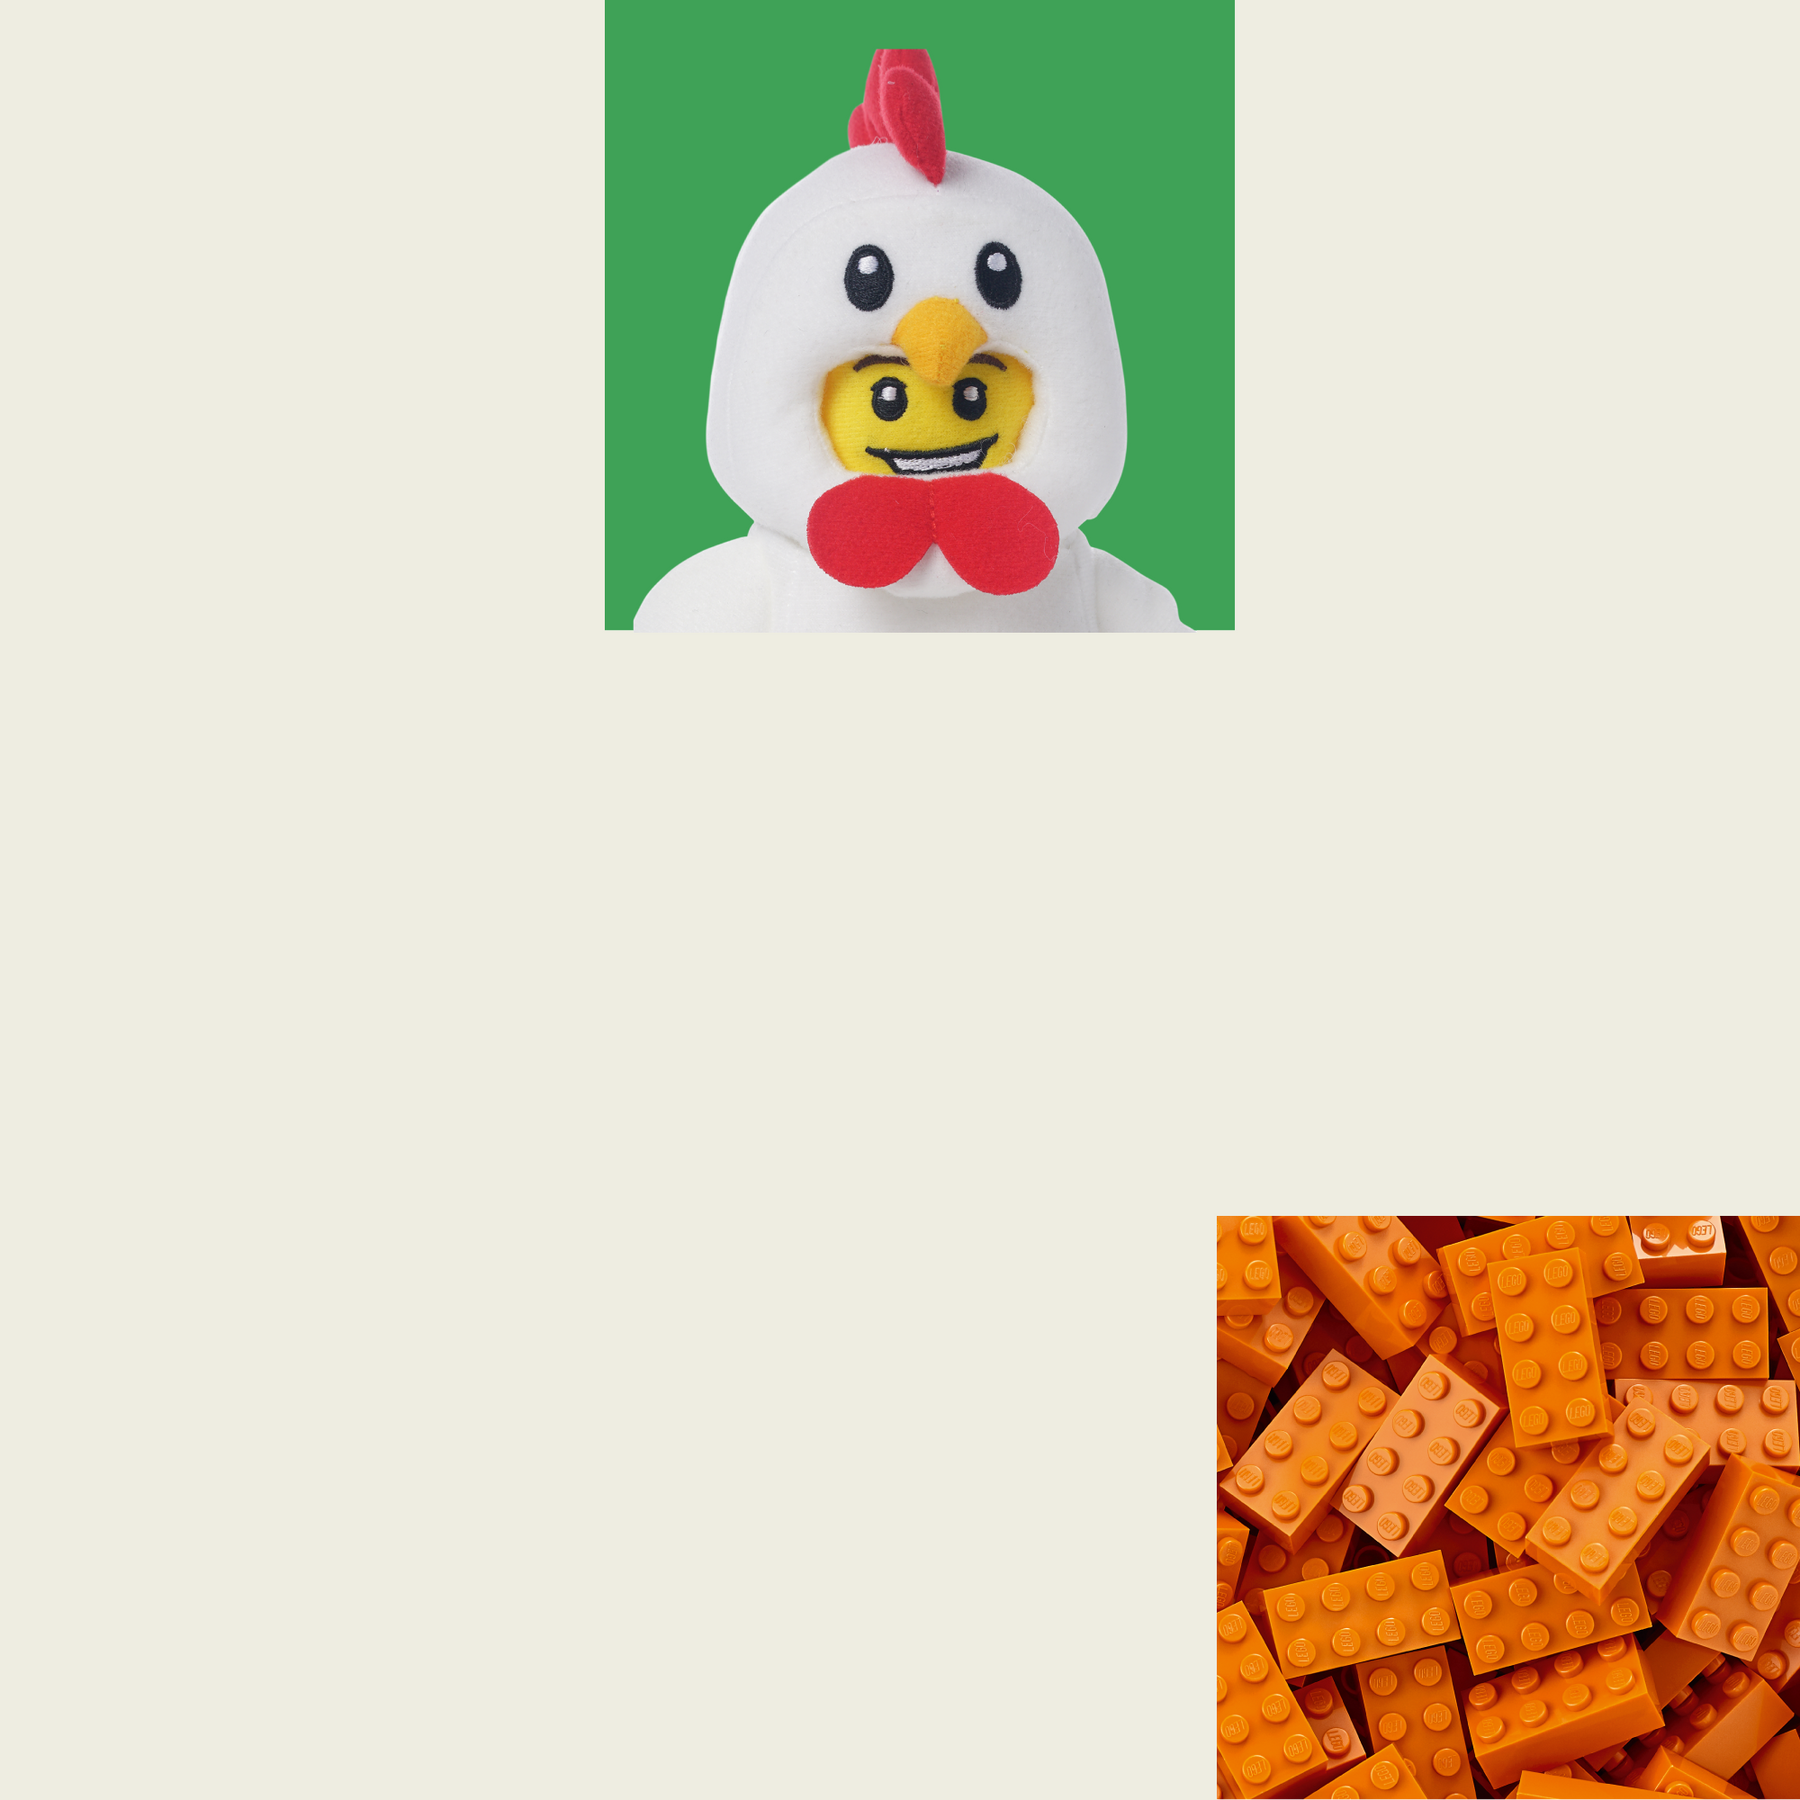 LEGO chicken plush and small orange bricks